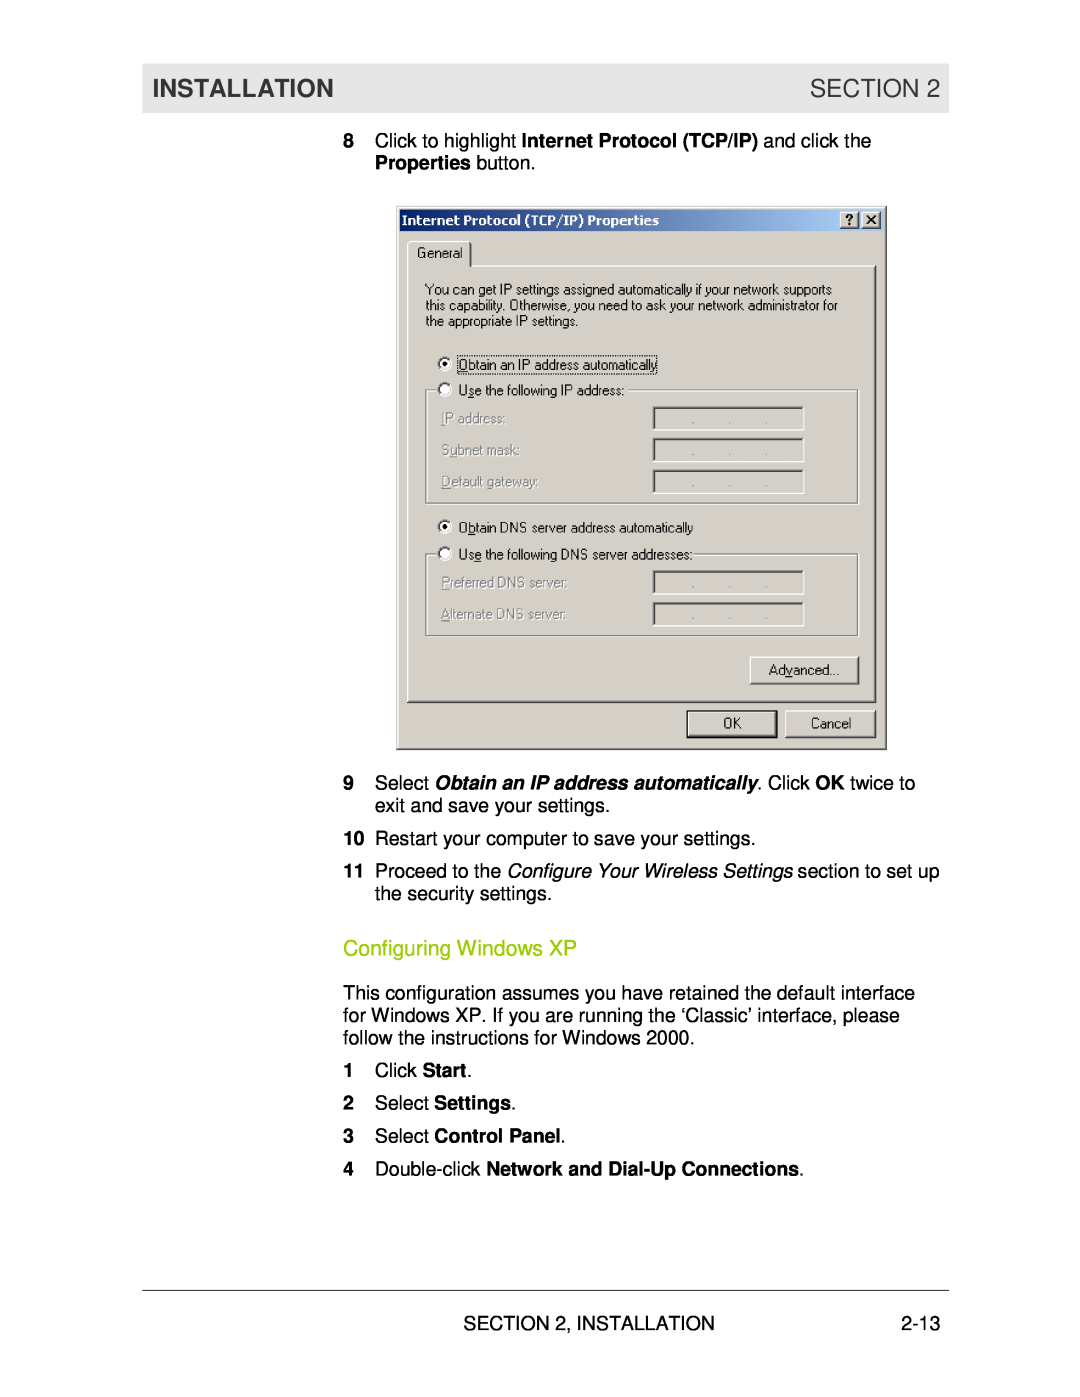 Motorola WR850G manual Configuring Windows XP, Installation, Section 